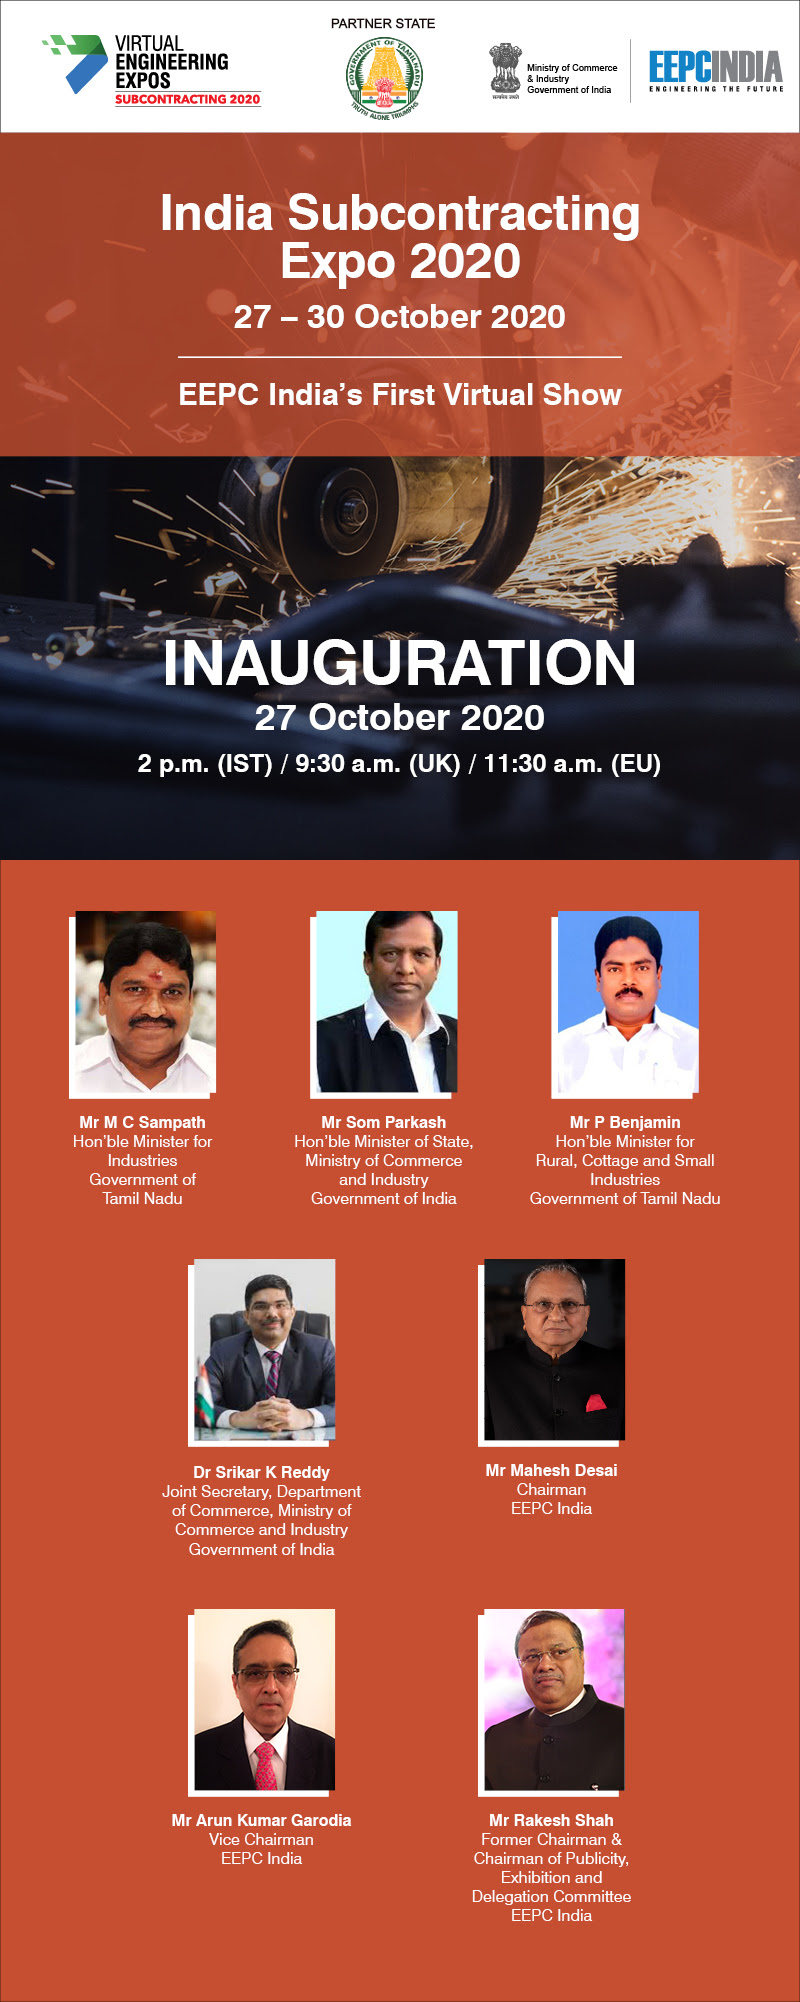 Inauguration_India_Subcontracting_Expo_2020